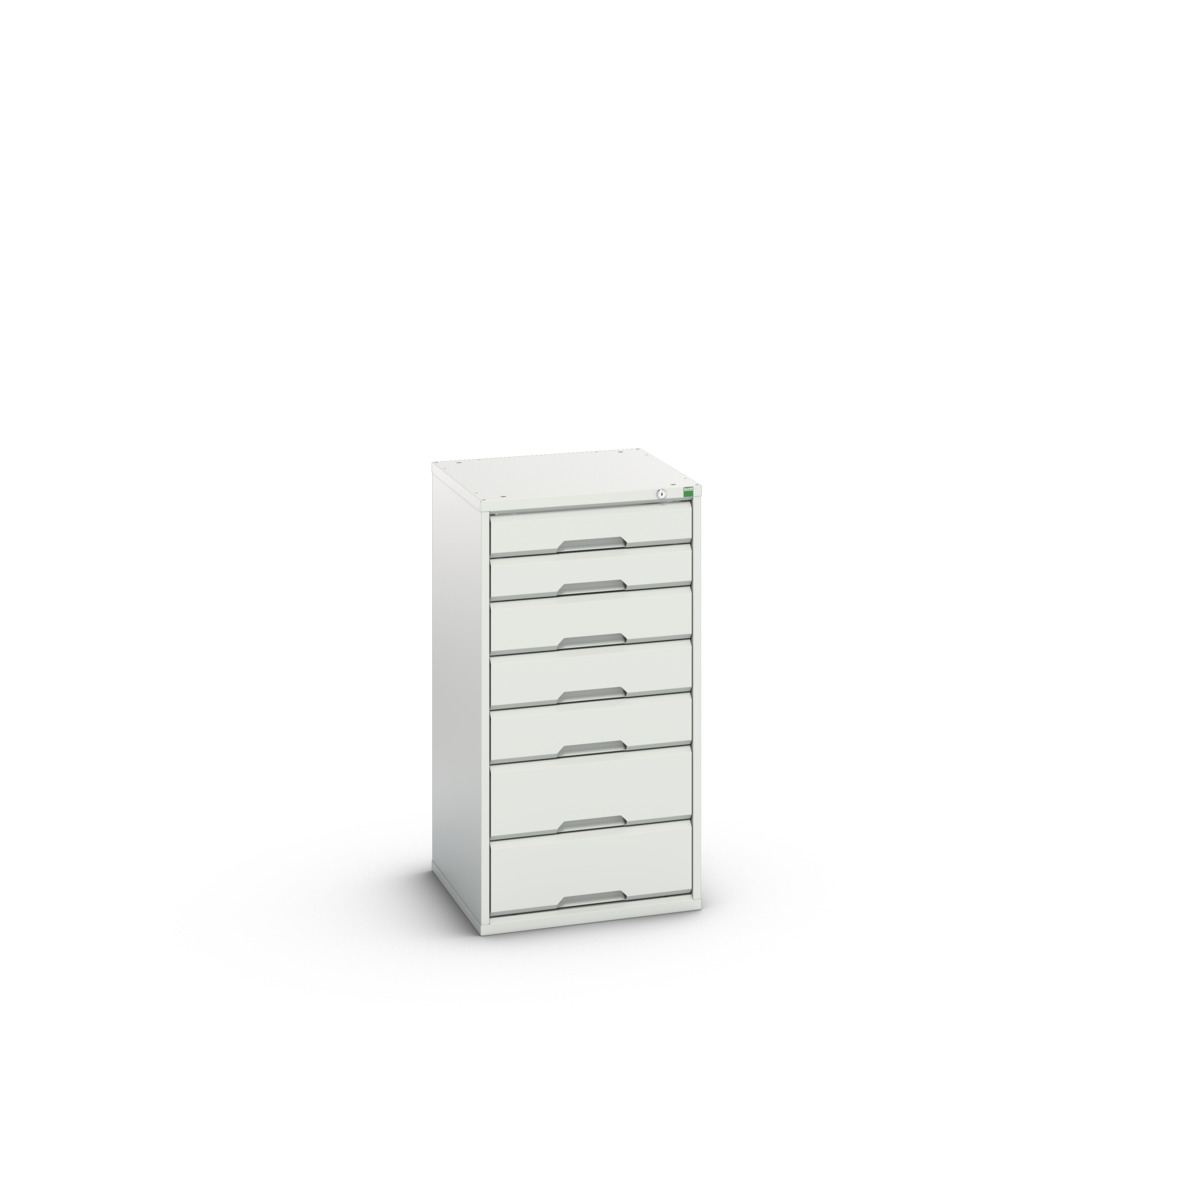 16925349.16 - verso drawer cabinet